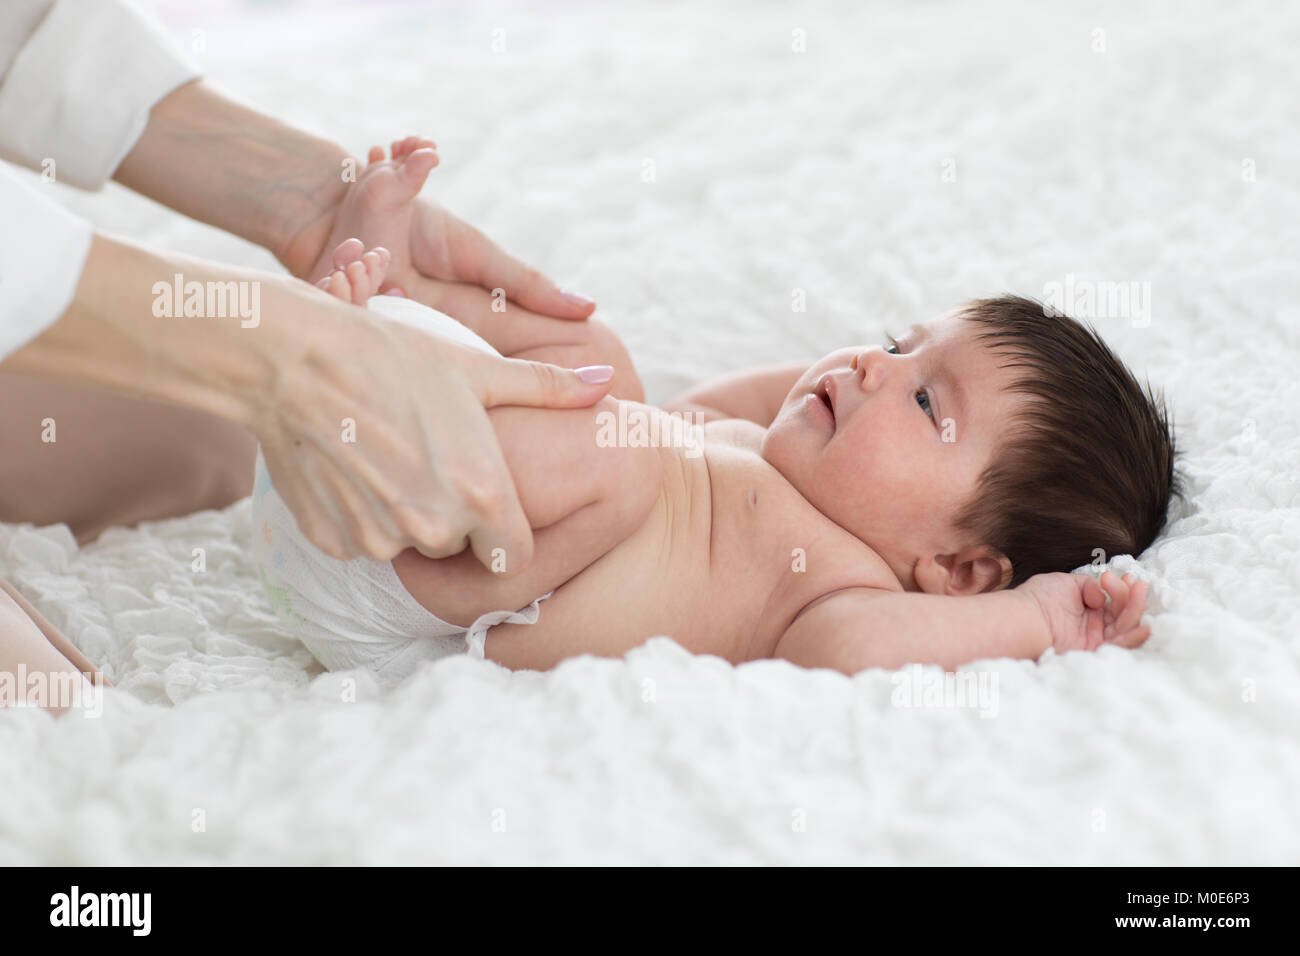 baby newborn is enjoying massage from mother Stock Photo